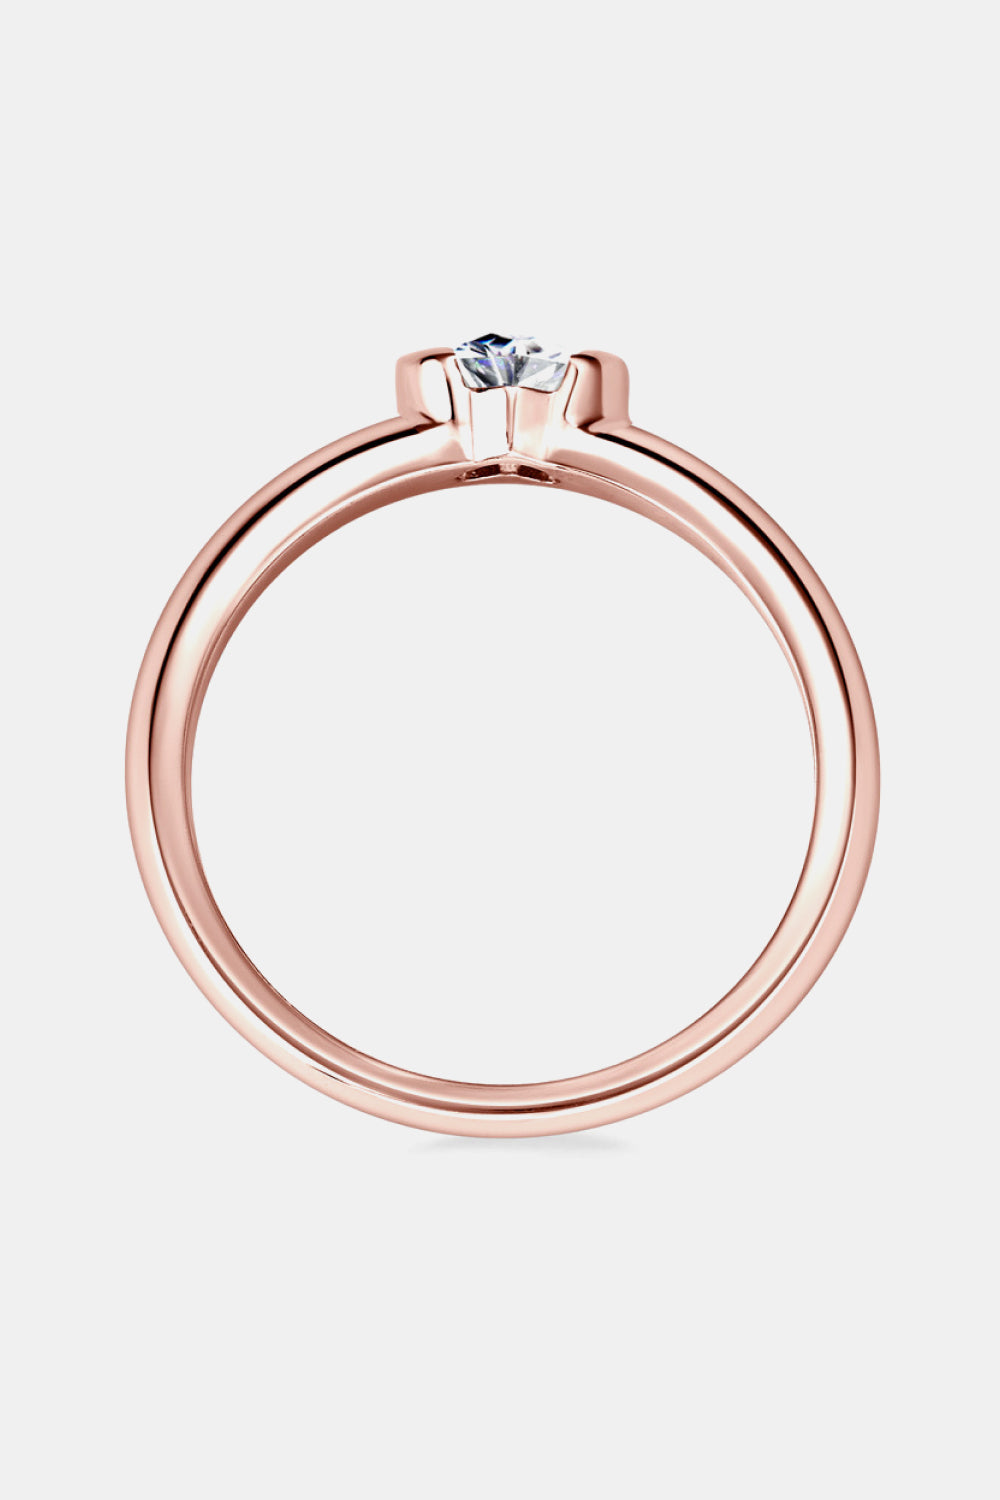 Women’s Moissanite 925 Sterling Silver Heart Solitaire Ring